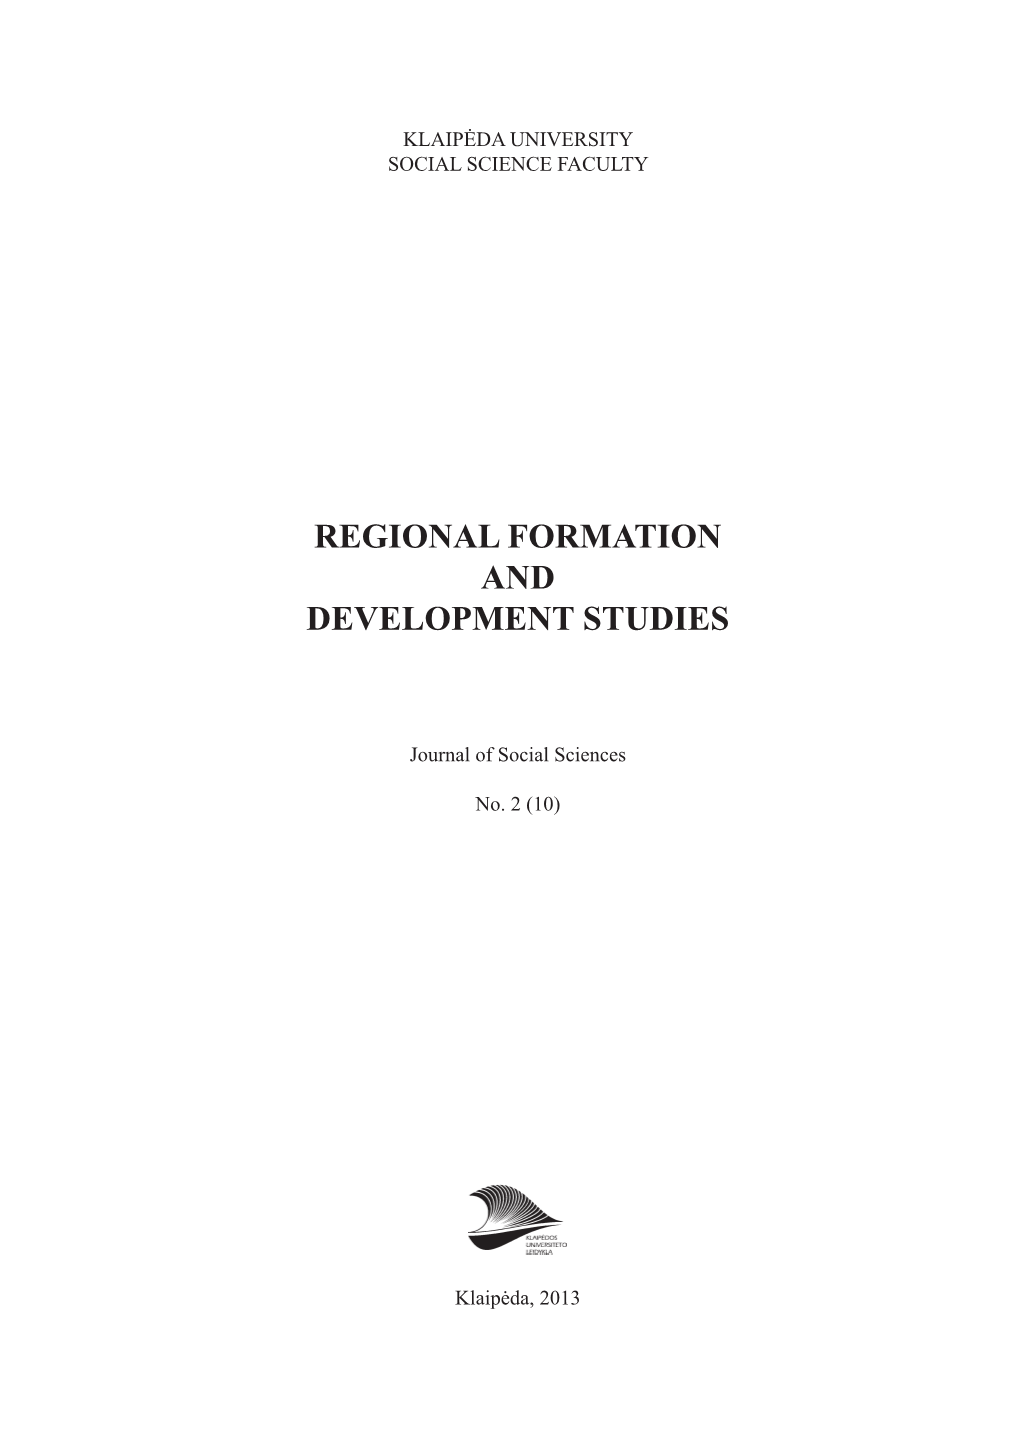 Regional Formation and Development Studies